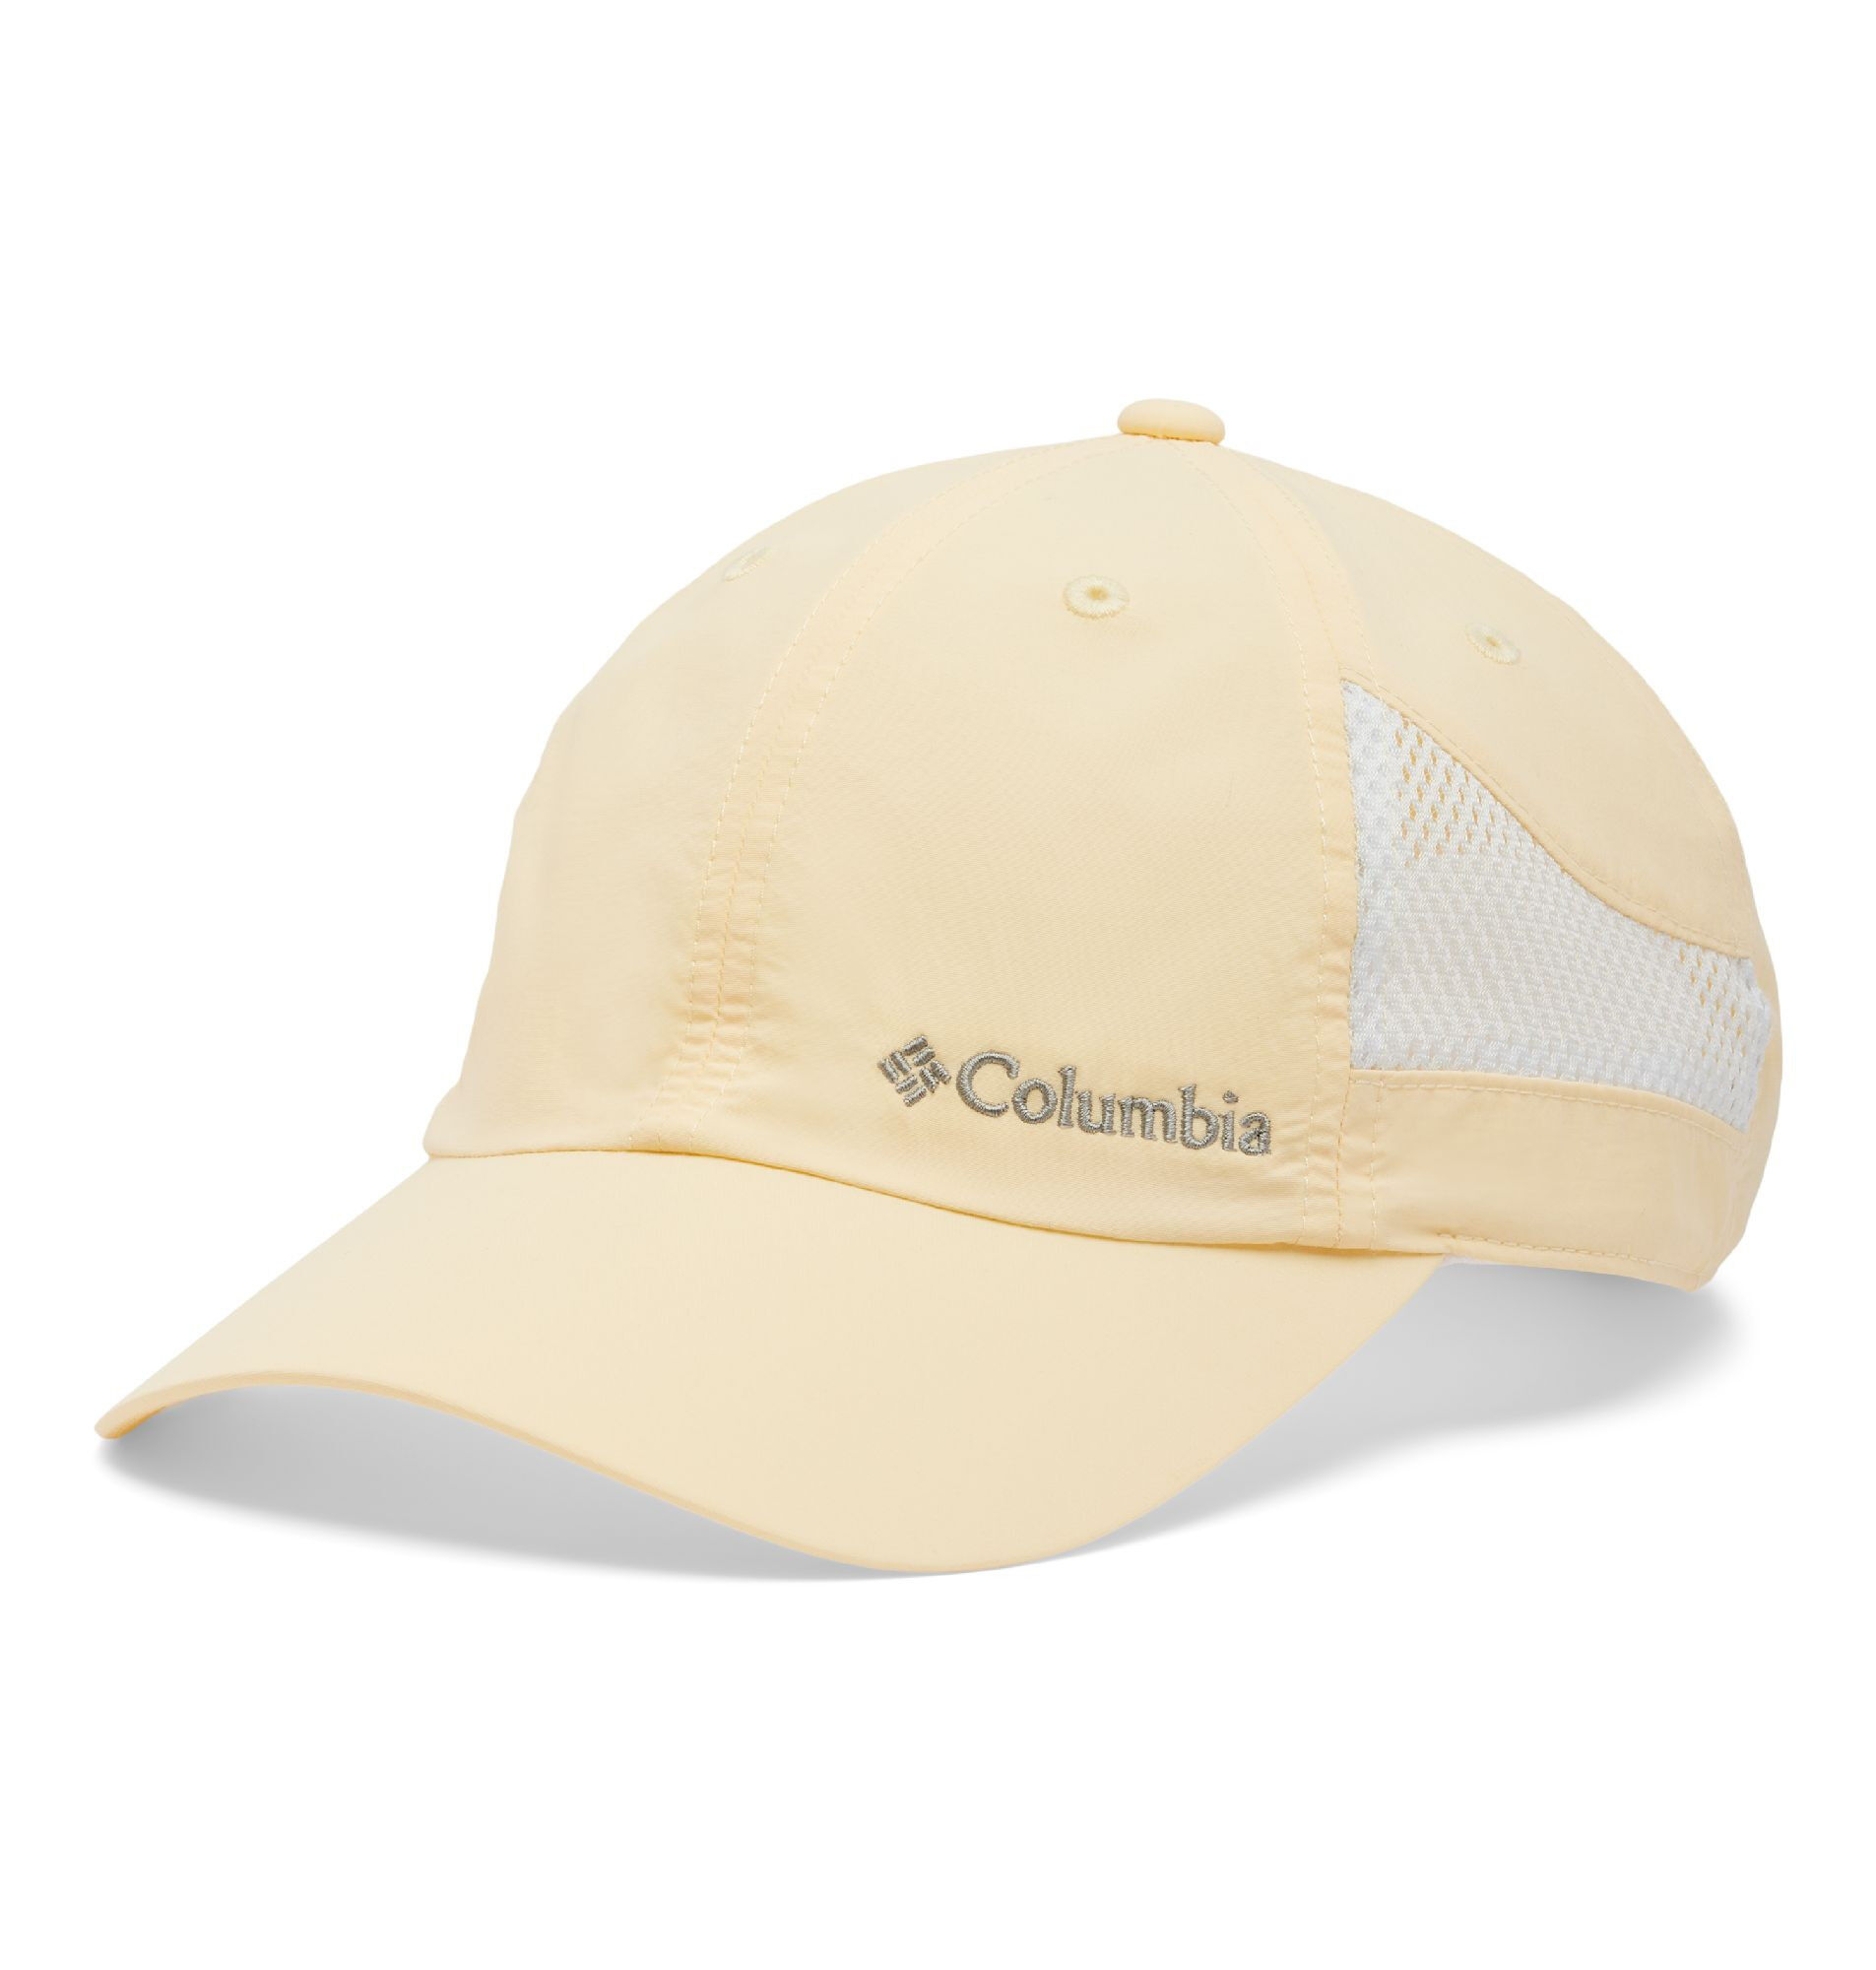 Columbia Tech Shade Hat - Pet